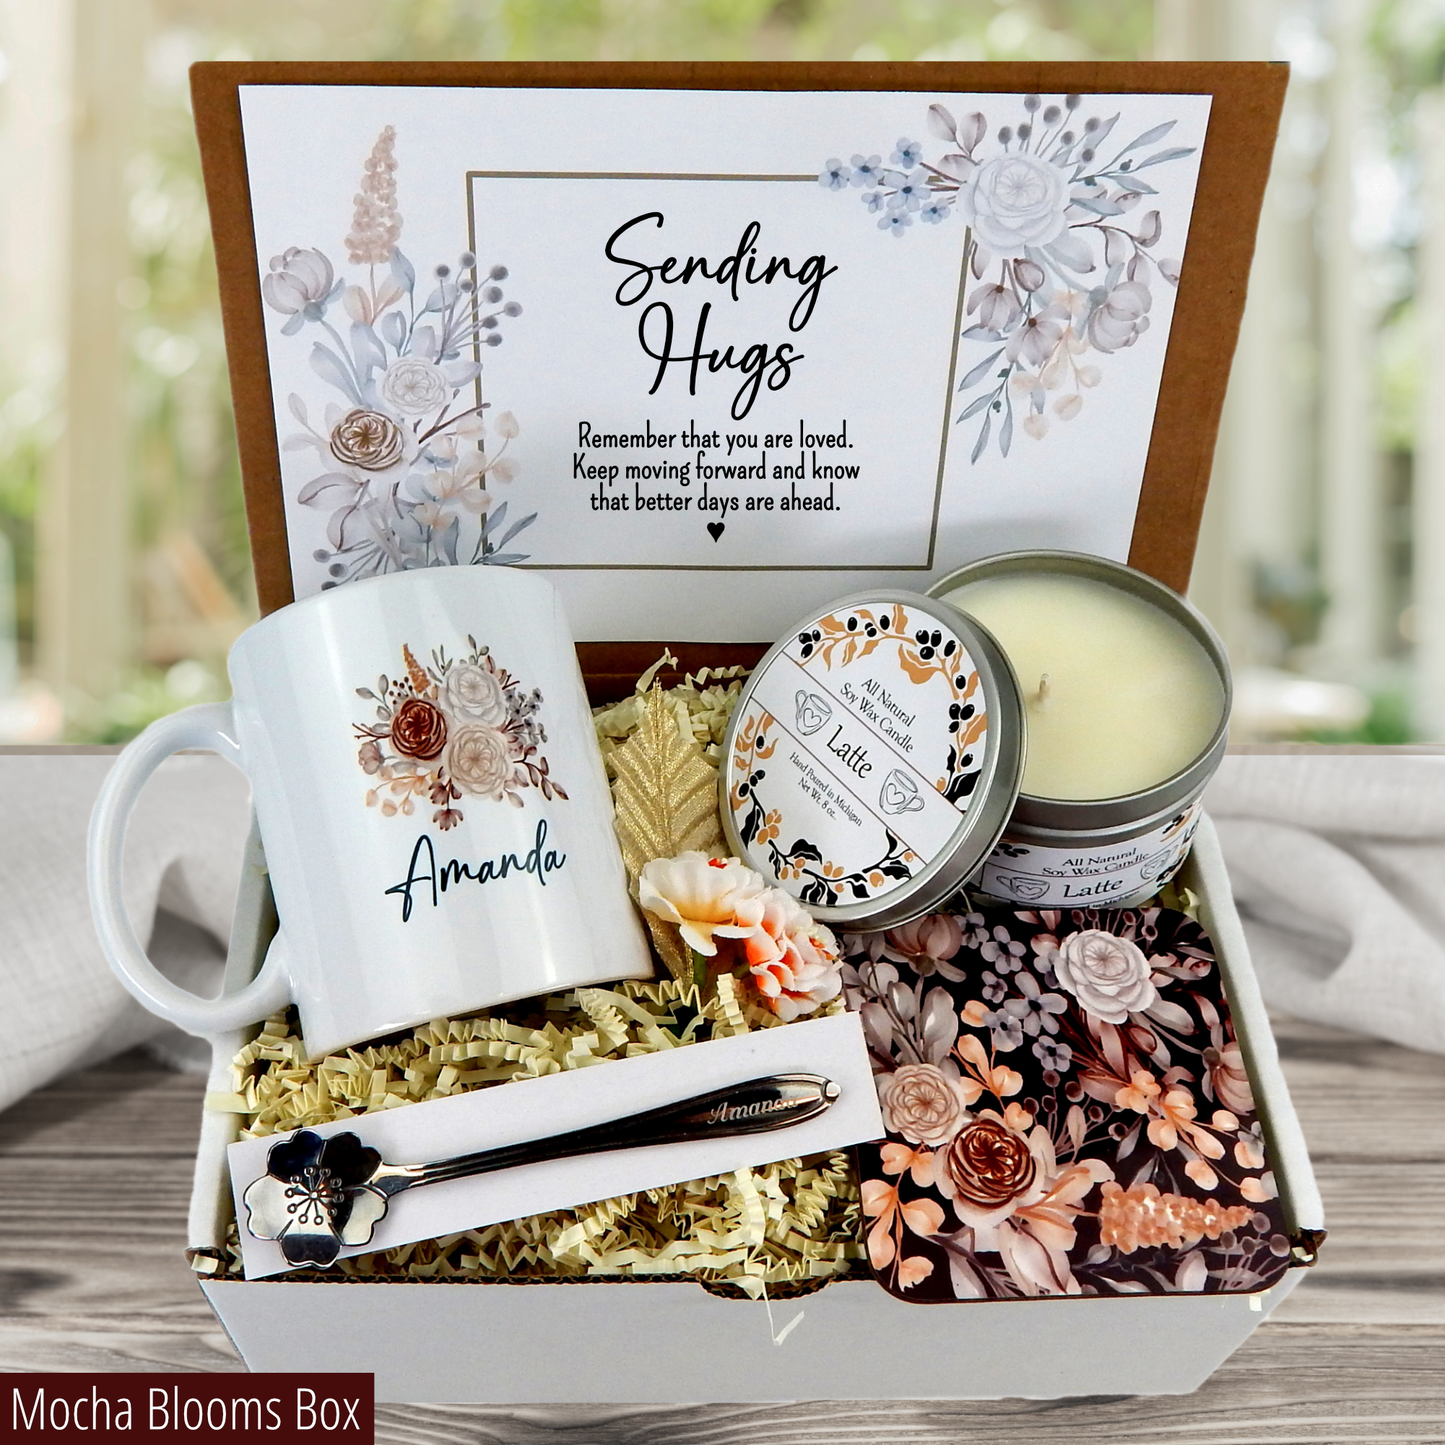 Heartwarming gift basket featuring a personalized mug for sending hugs